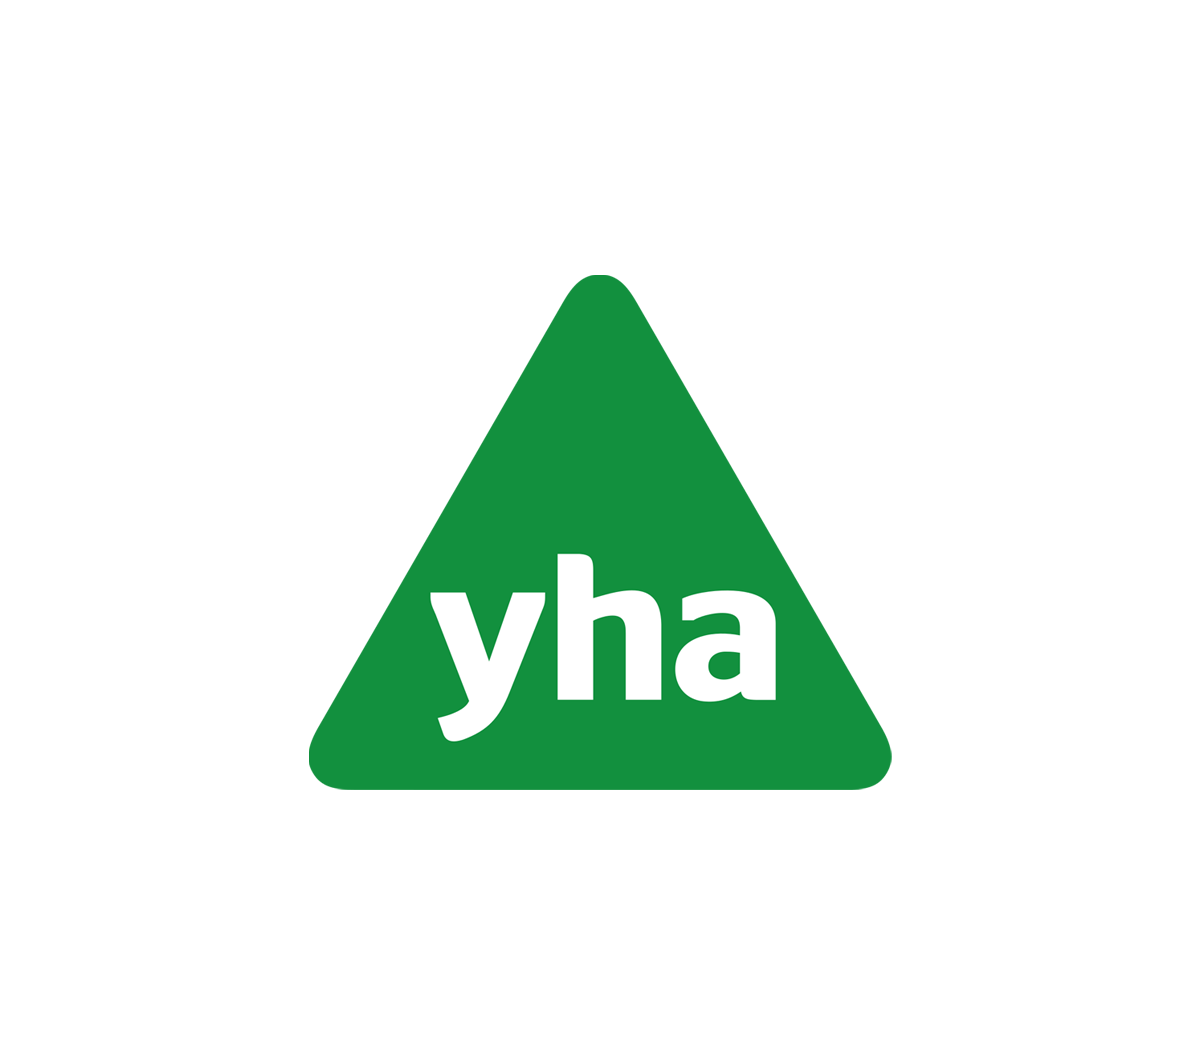 Youth Hostel Association.